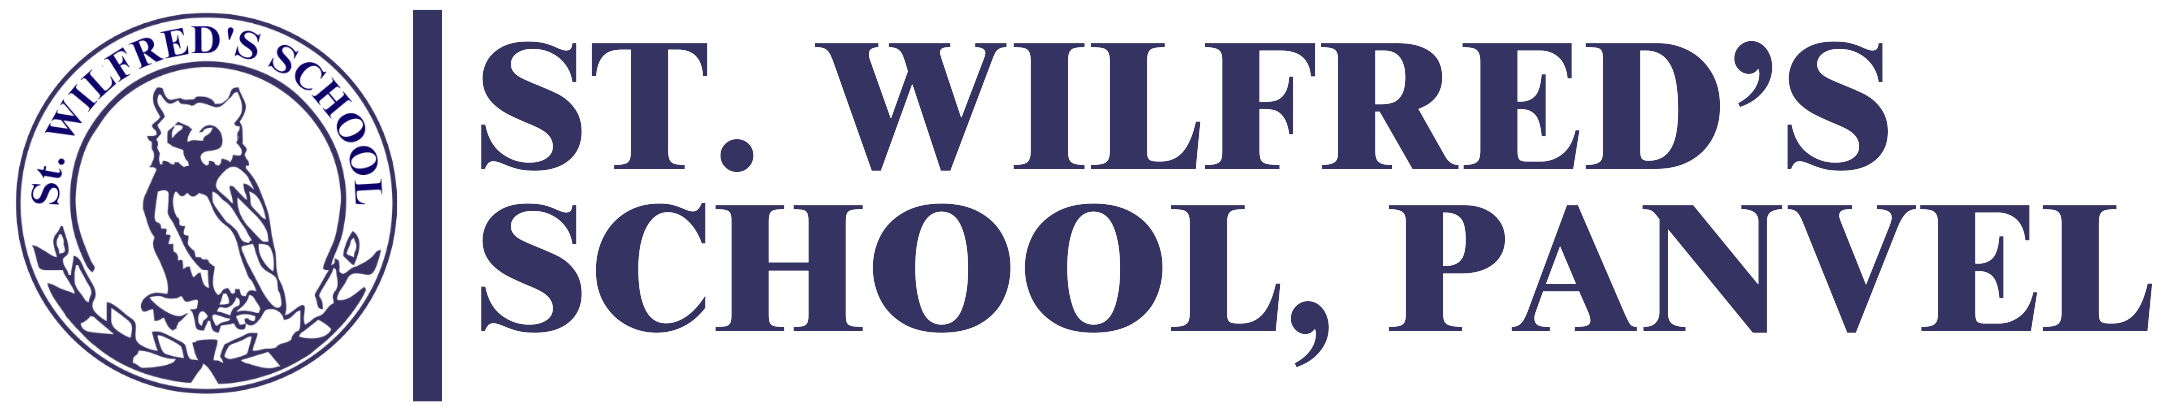 St. Wilfred's School Panvel